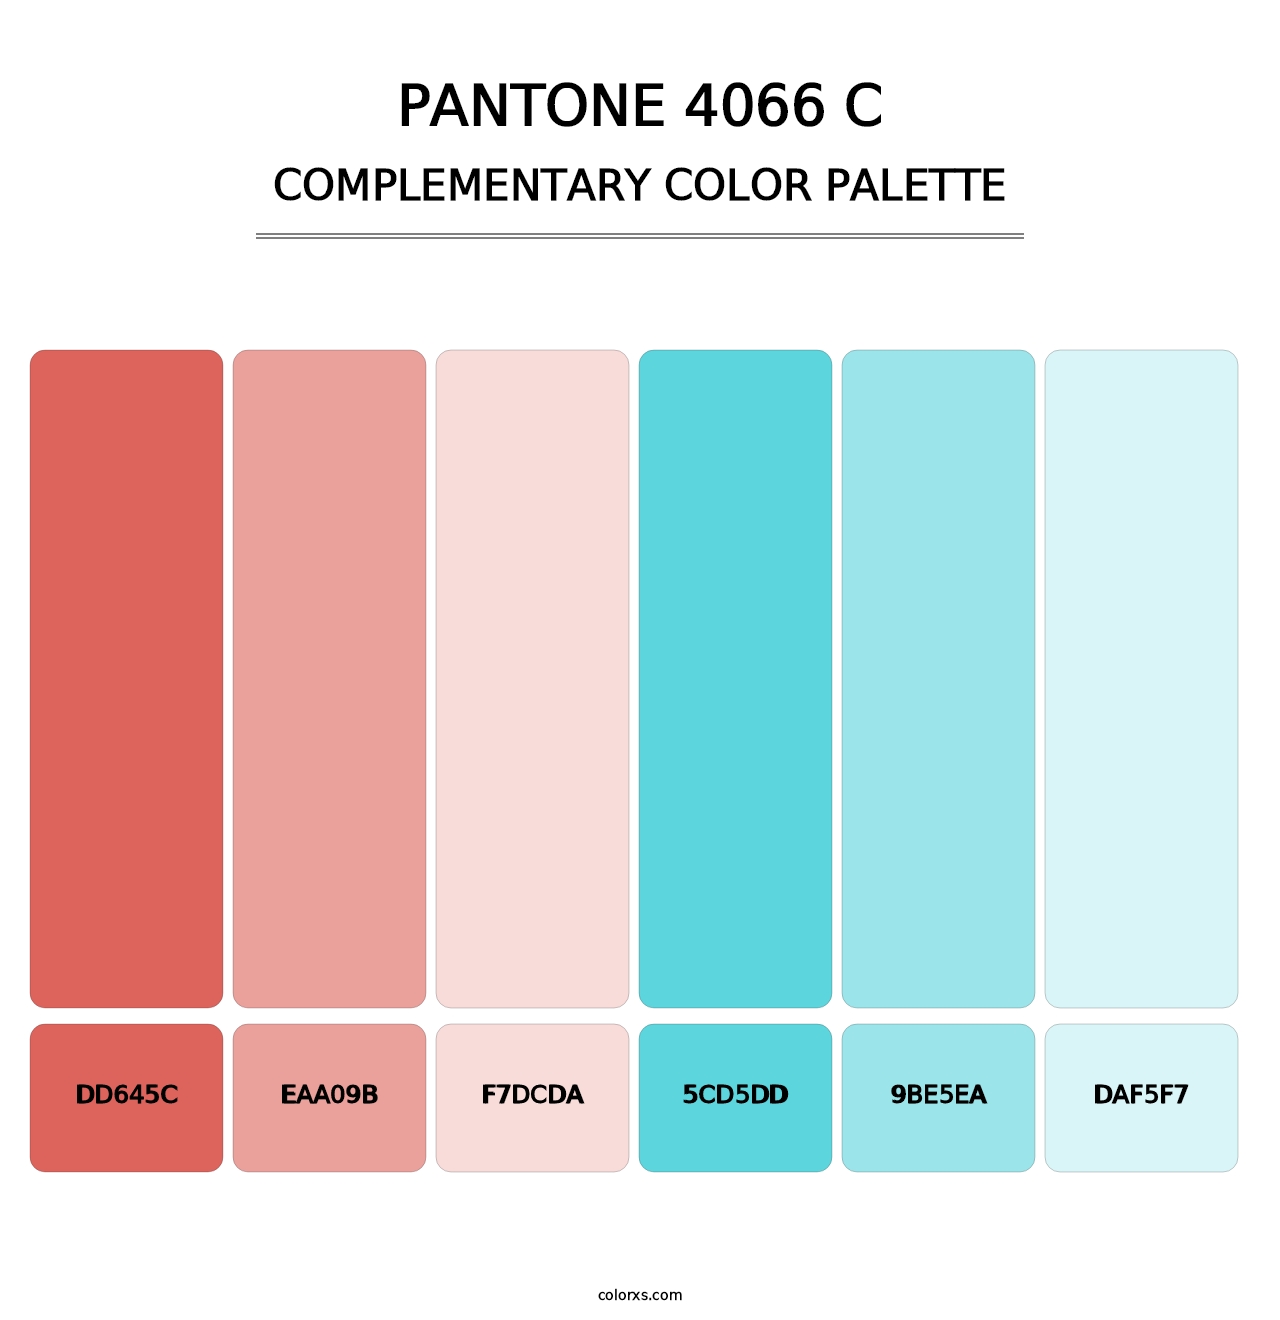 PANTONE 4066 C - Complementary Color Palette